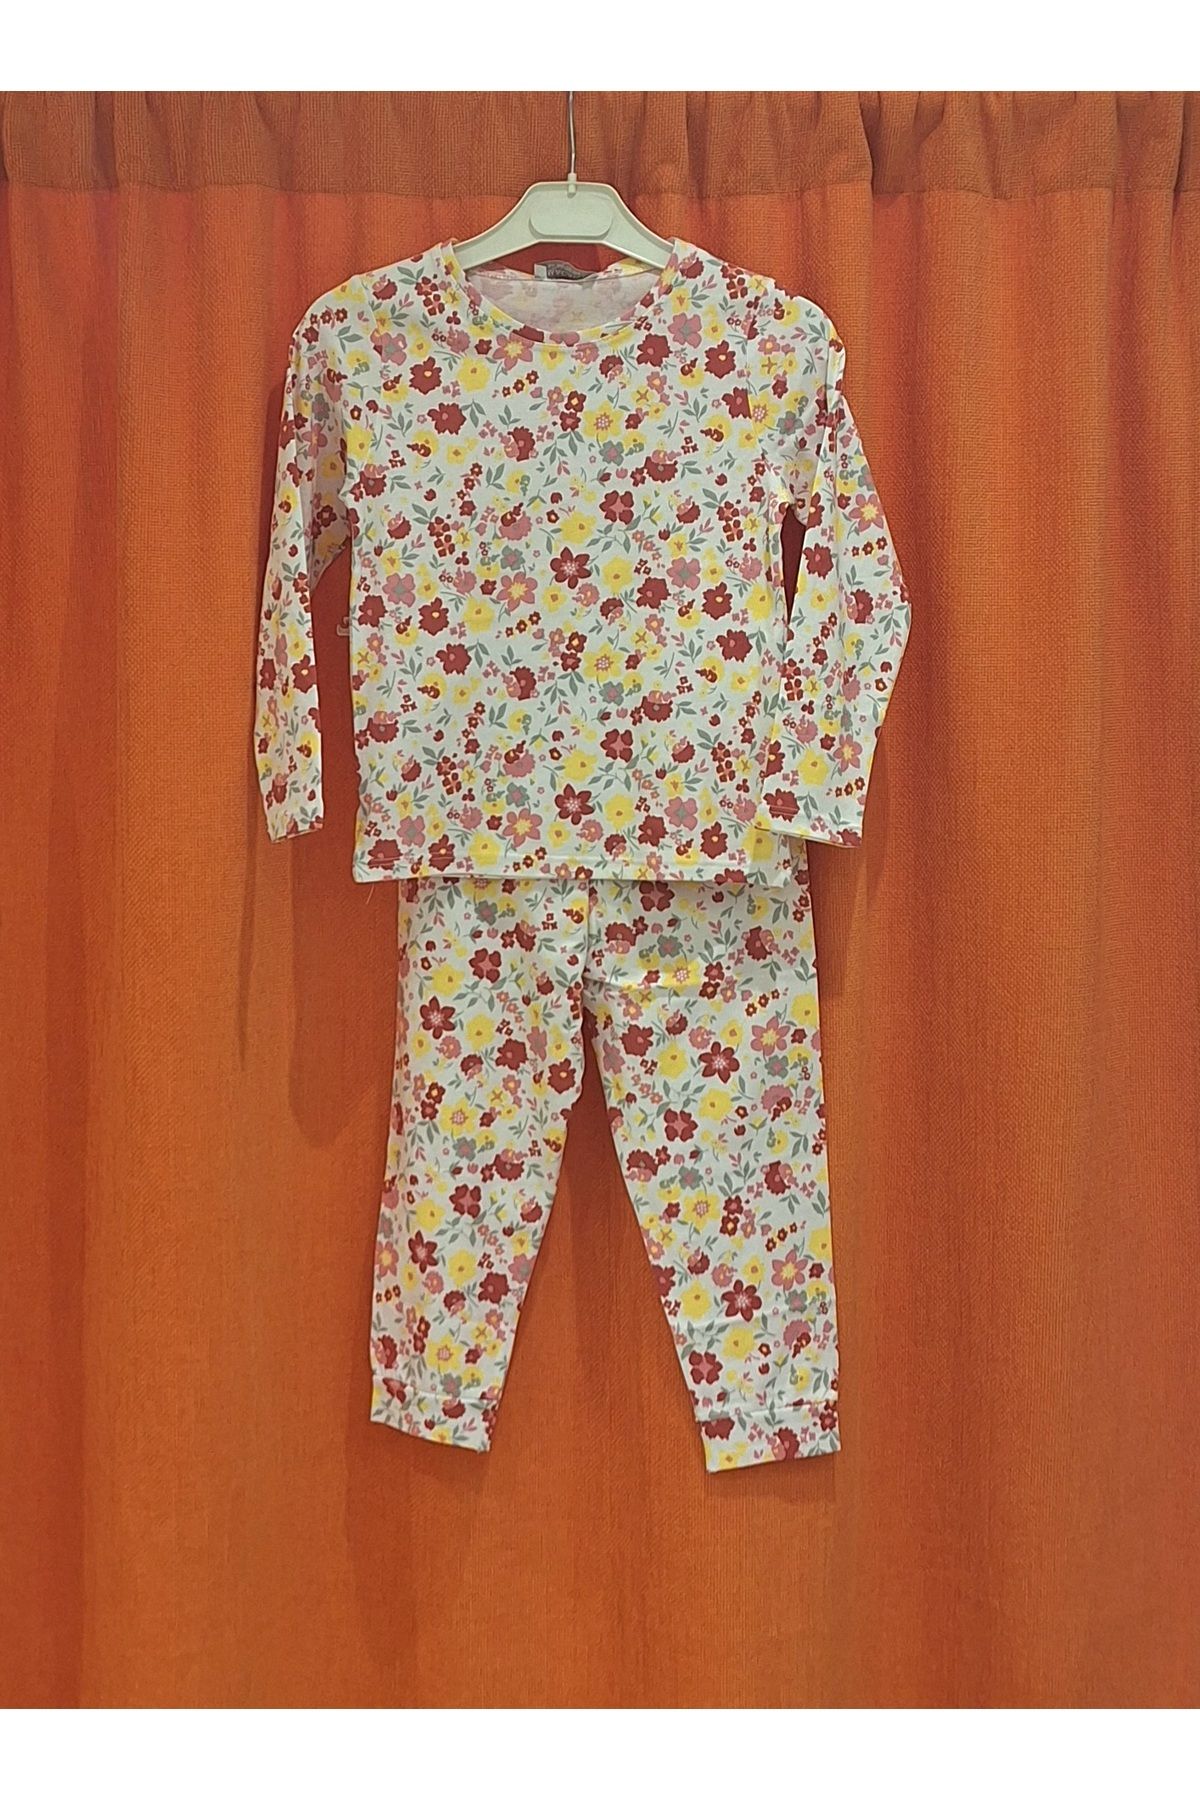 Macawi Renkli Çiçekli Pijama Takımı